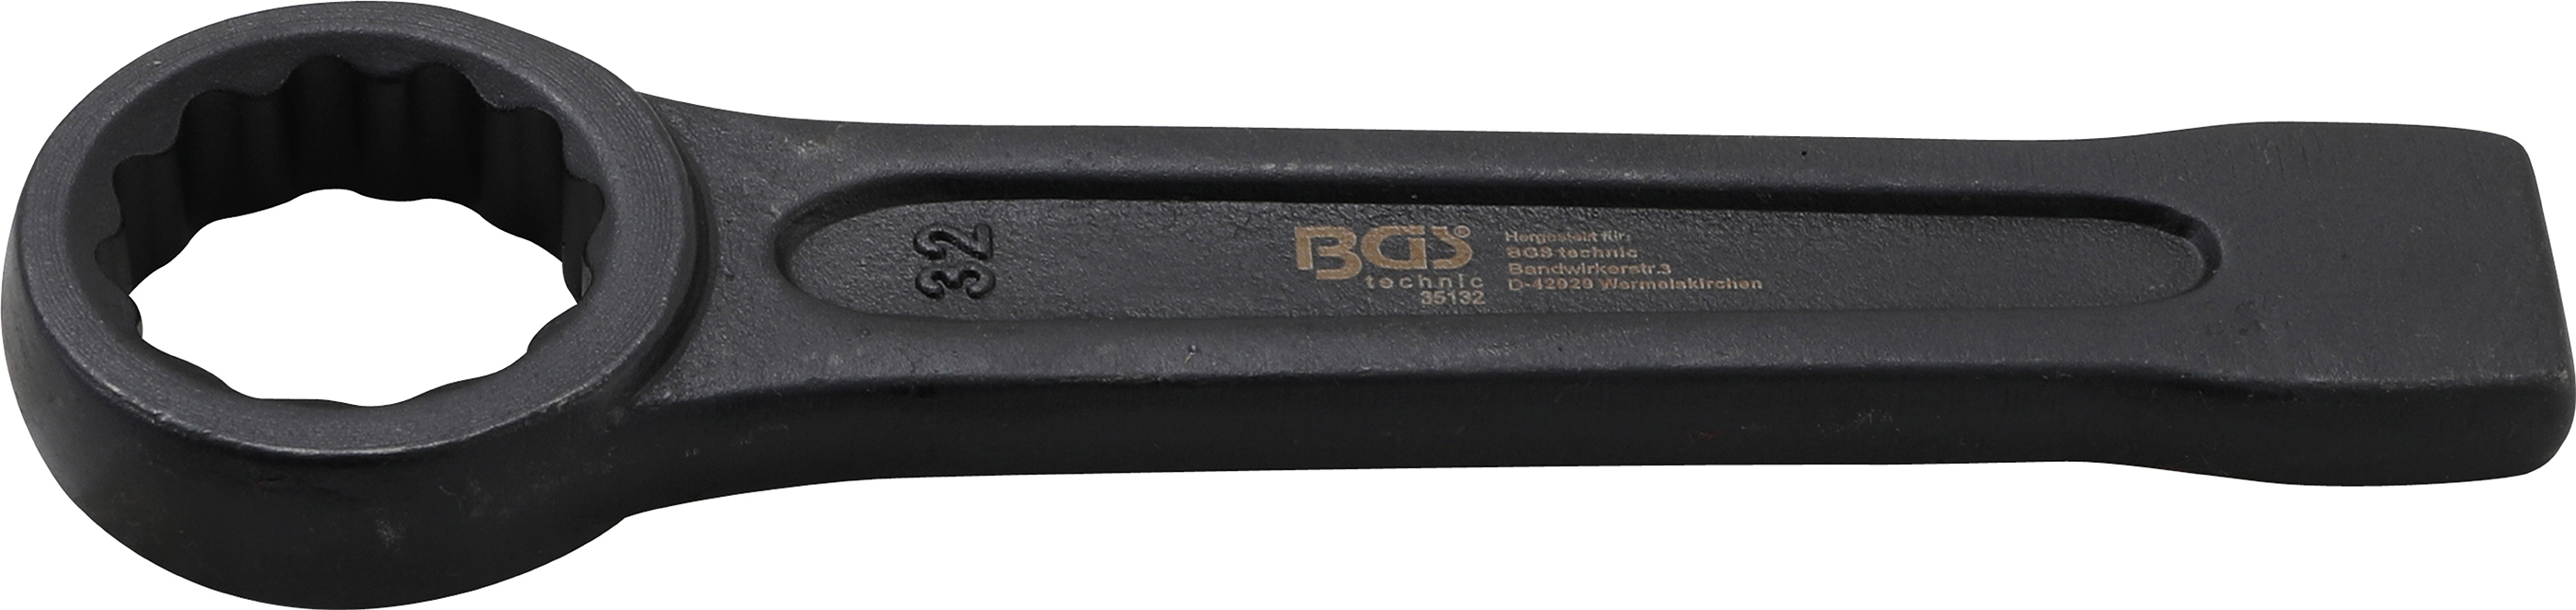 BGS 35132 Cheie inelară cu impact | 32 mm